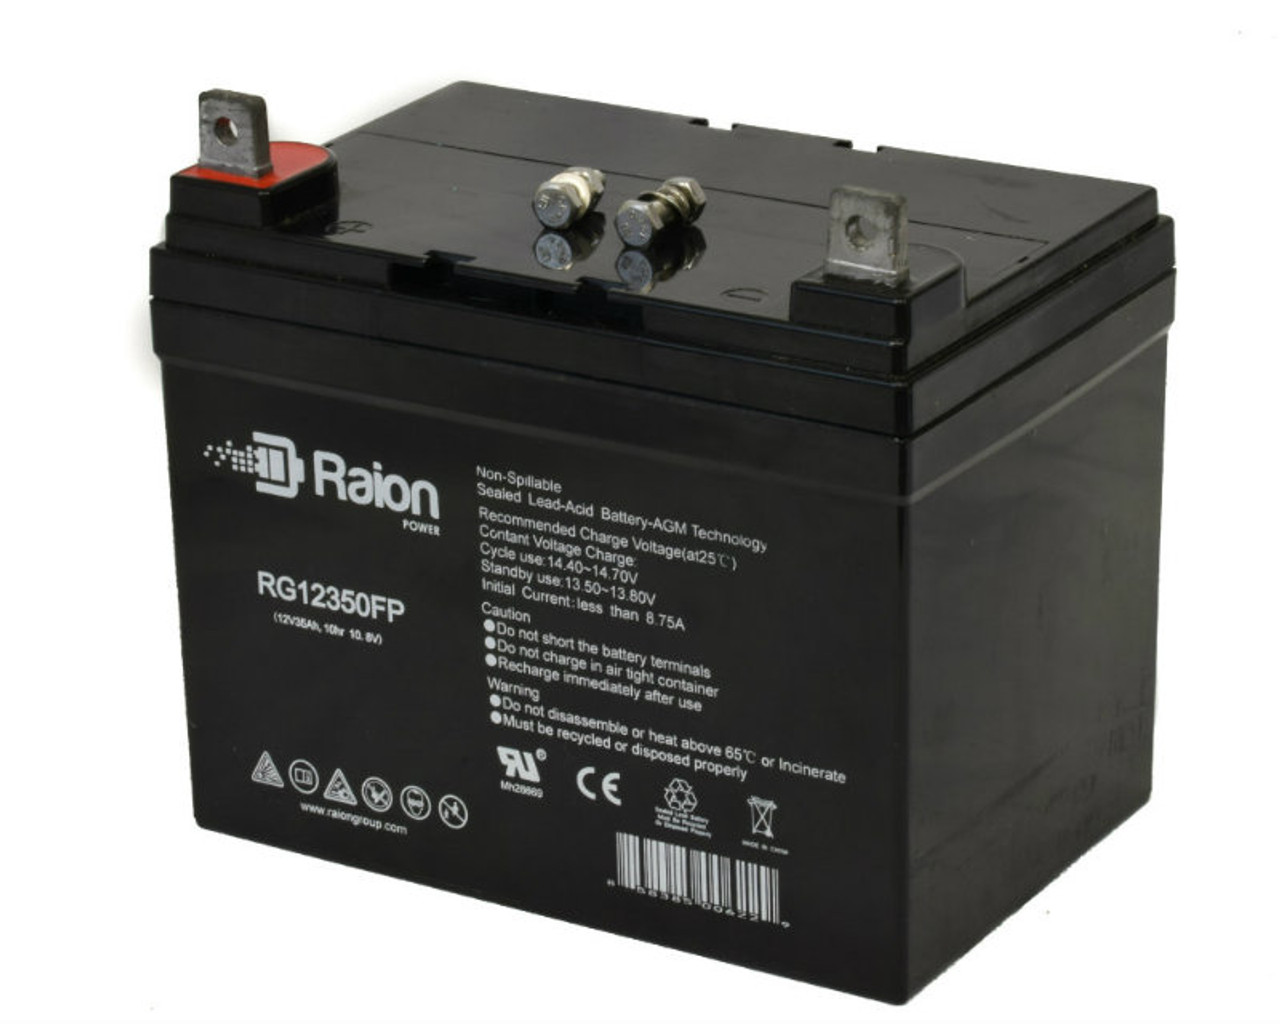 Raion Power Replacement 12V 35Ah RG12350FP Mobility Scooter Battery for Amigo Mobility Gleiser